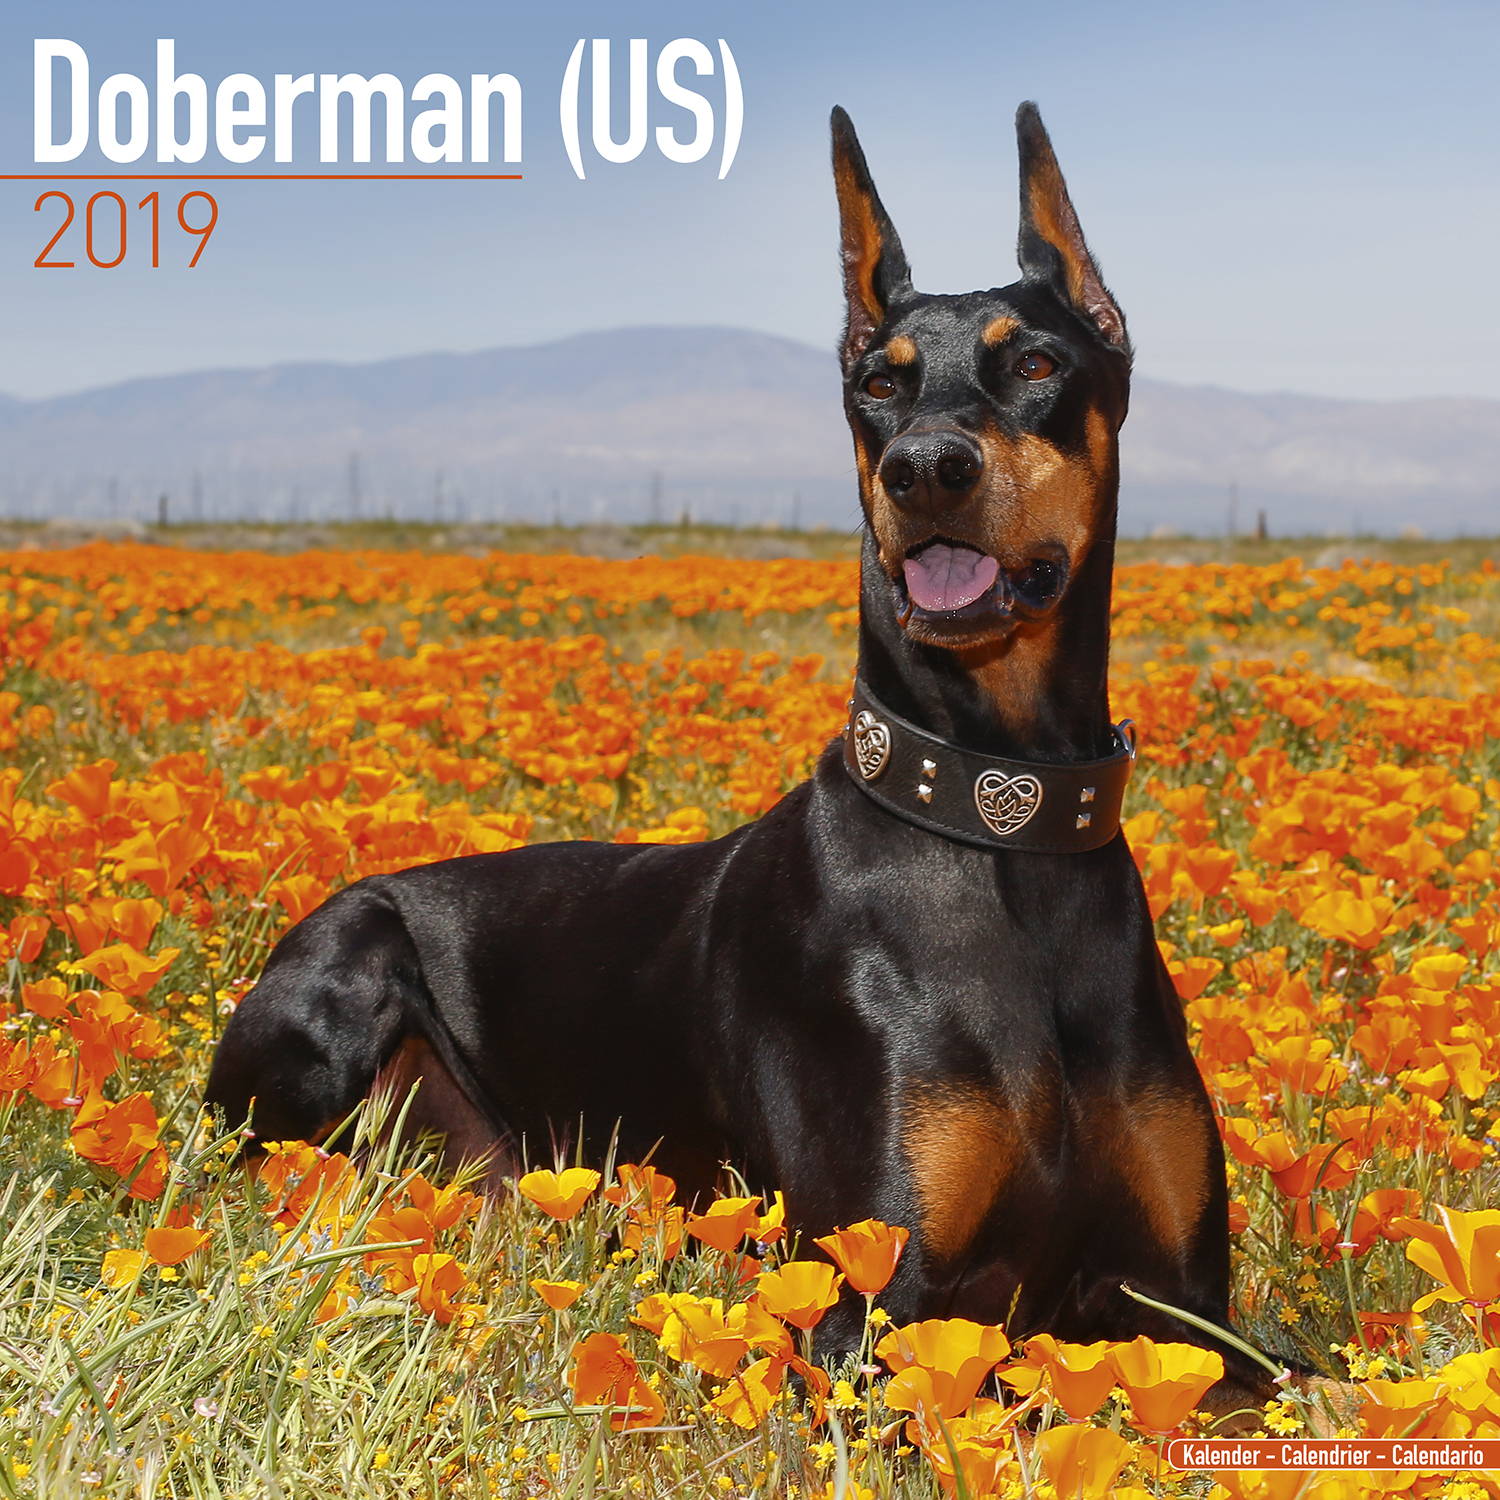 Doberman (Us) Calendar, Dog Breed Calendars | MegaCalendars